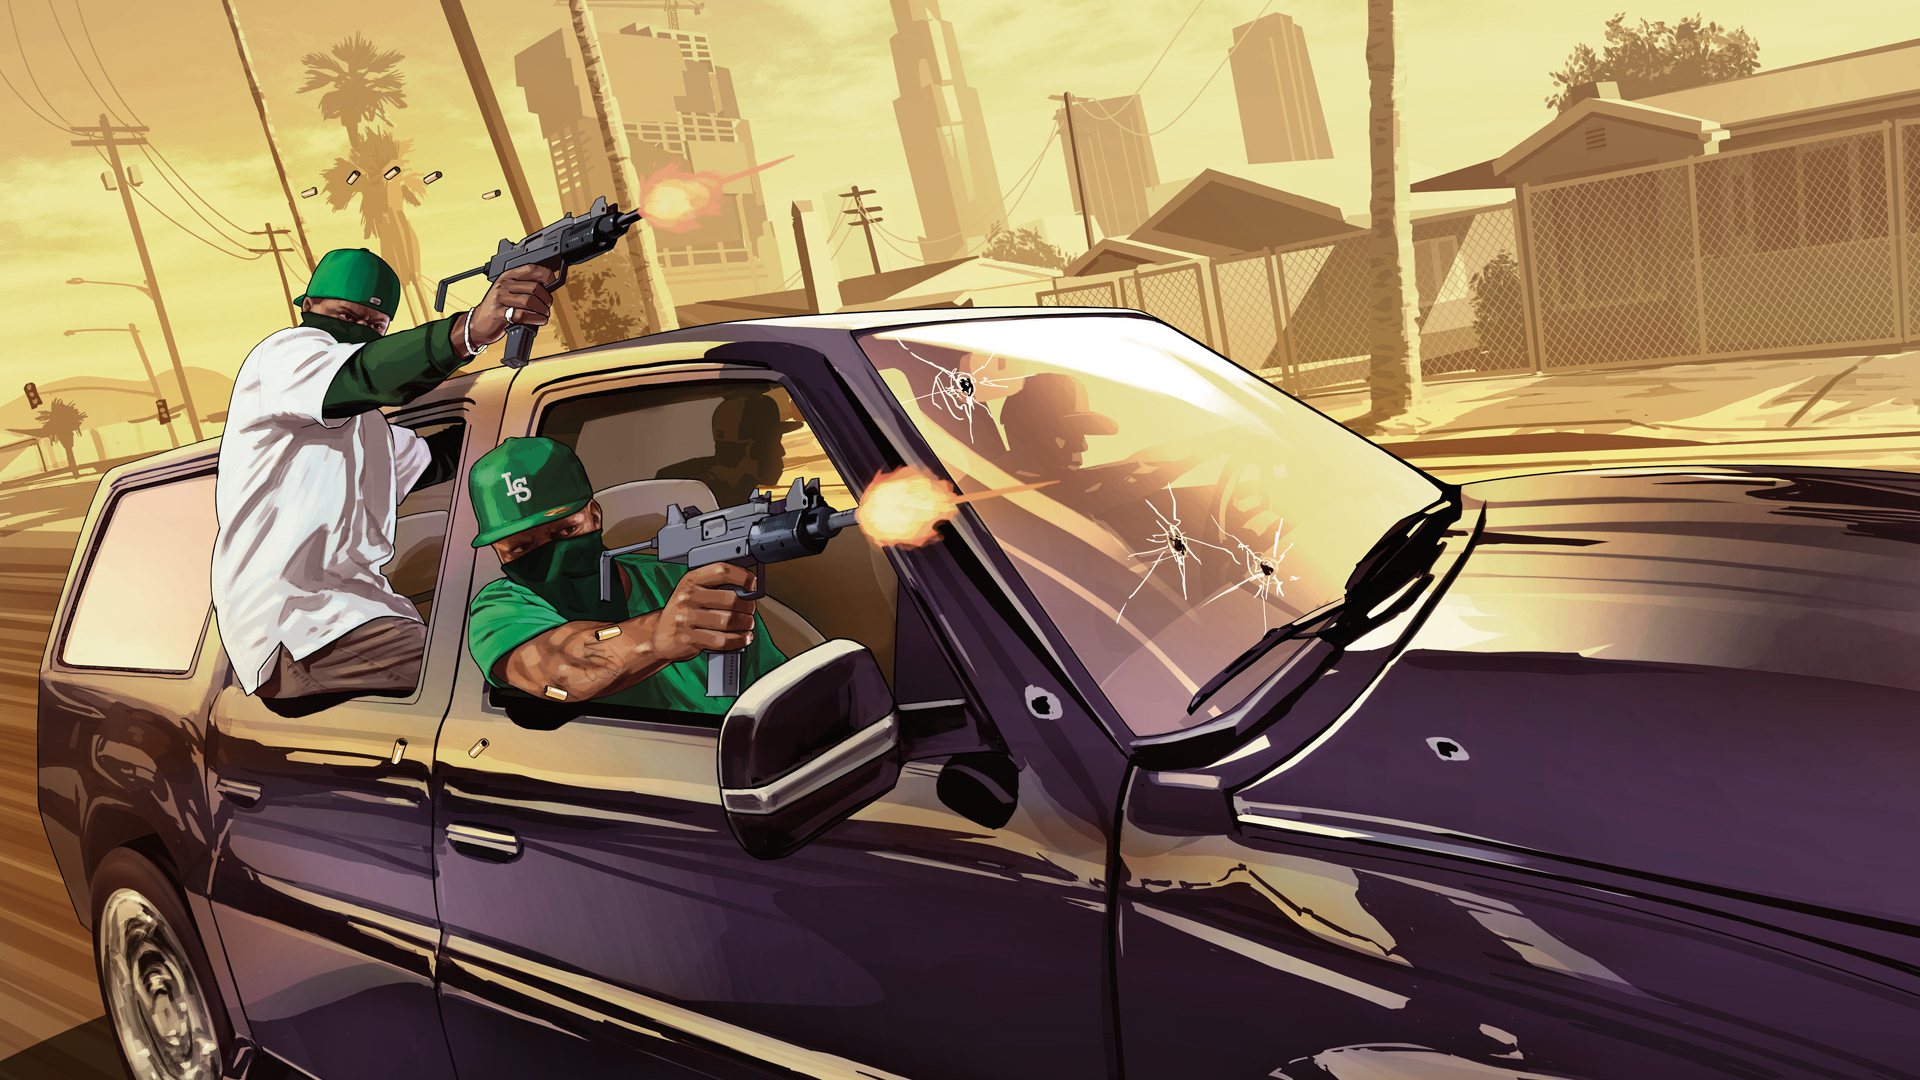 Gangs shootout. Wallpaper from Grand Theft Auto Online